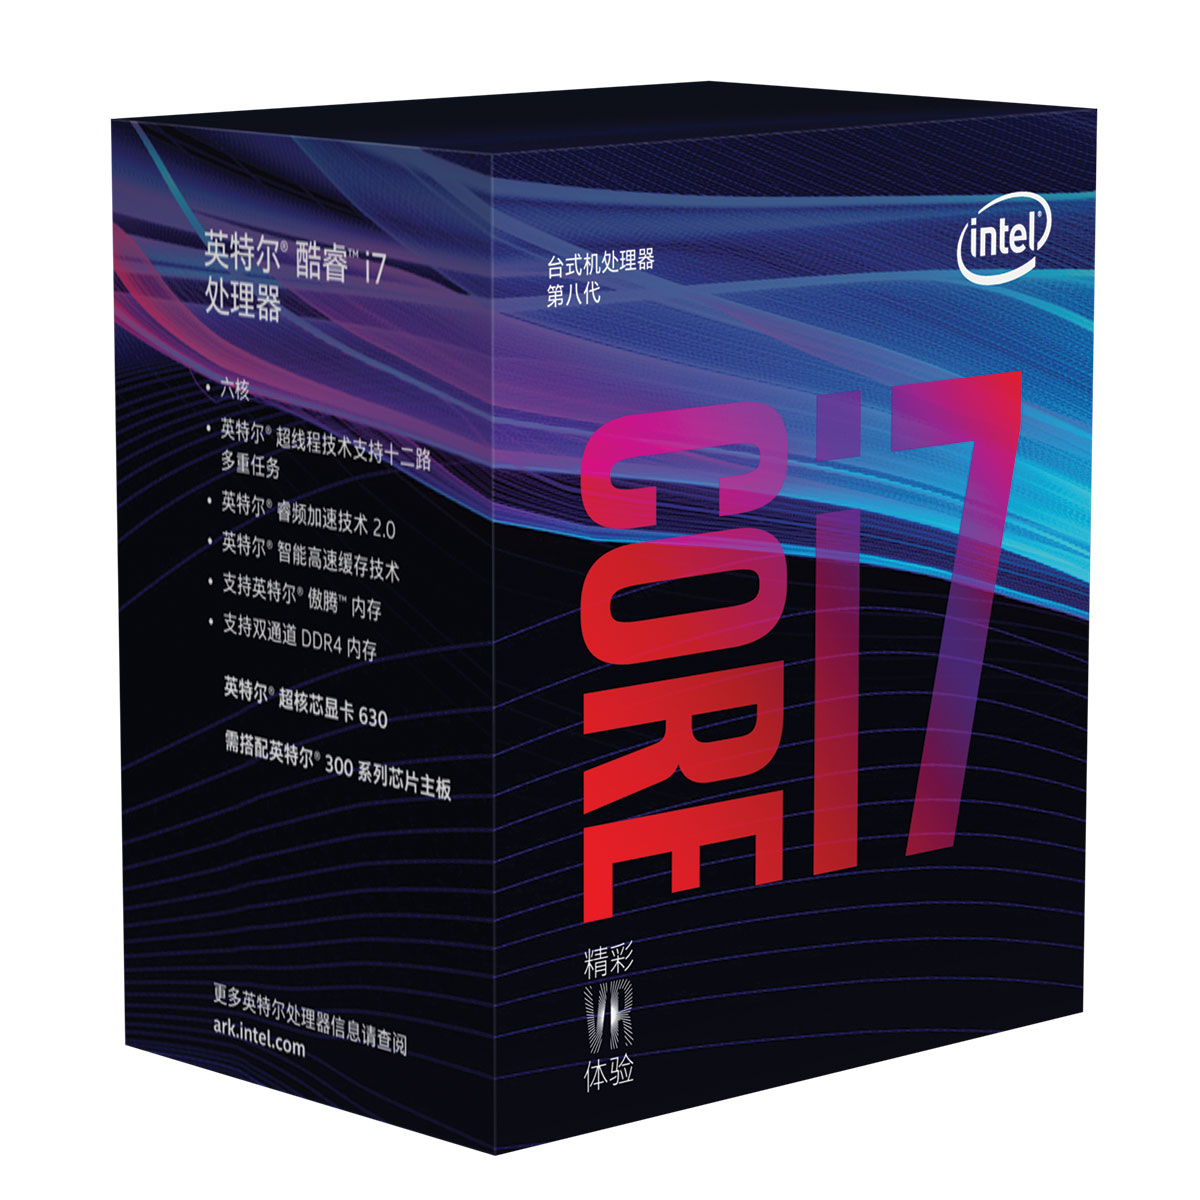 Core i7-8700K (3.7 GHz)